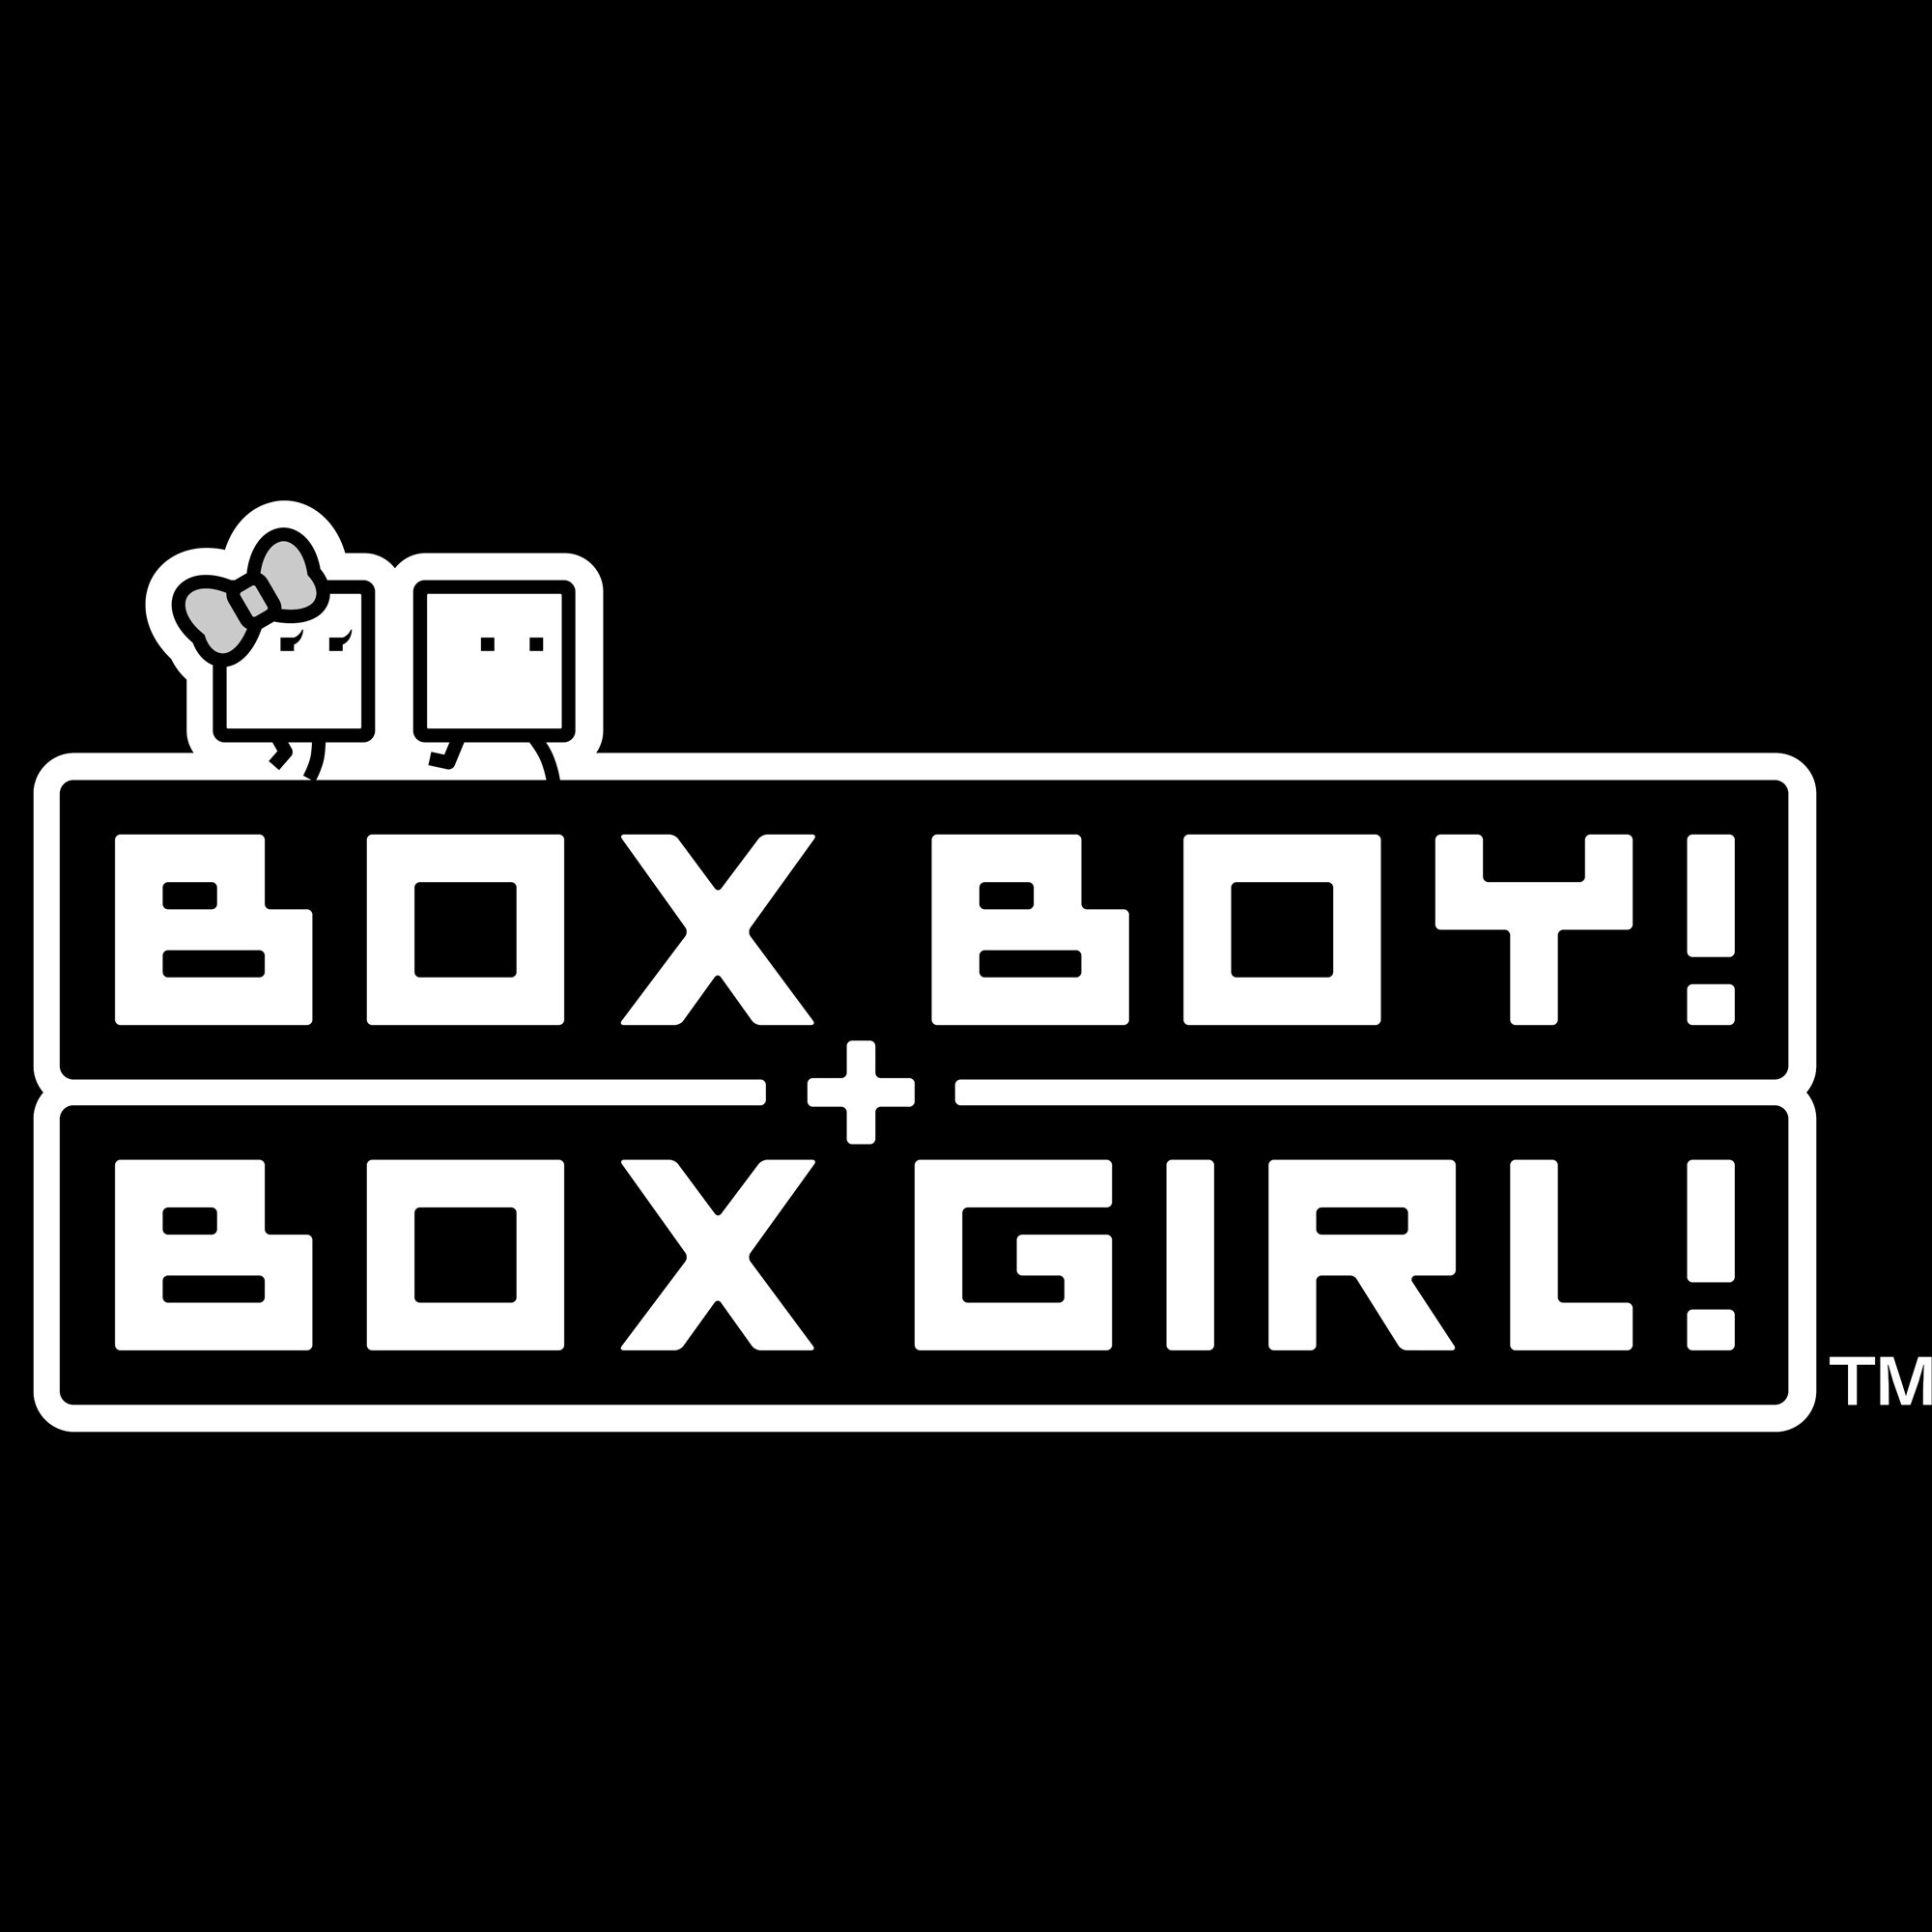 Boxboy Boxgirl Ign